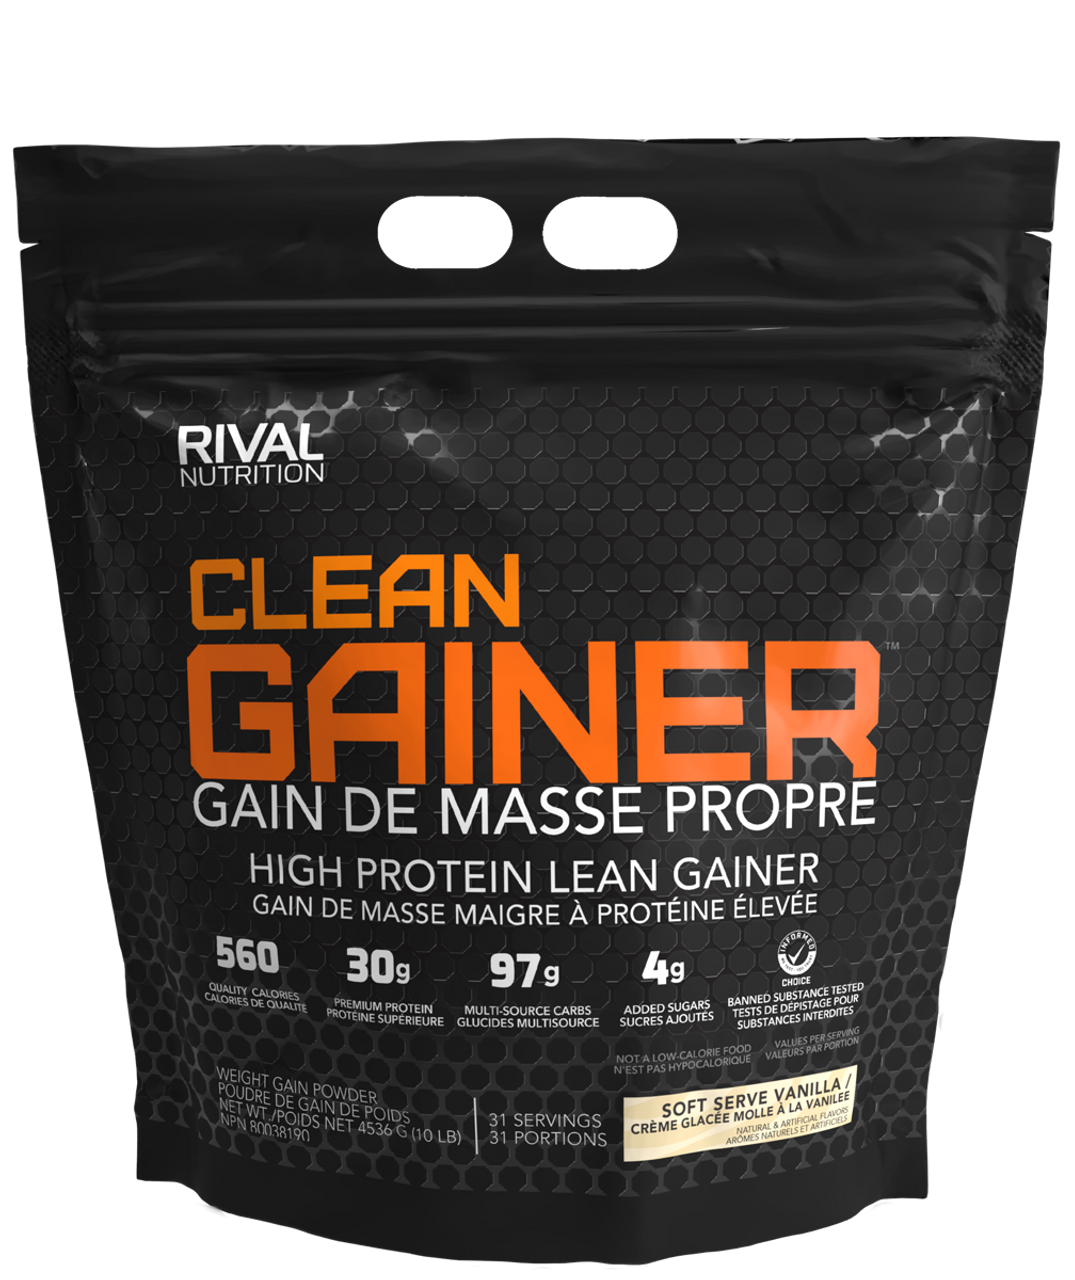 Clean Gainer - 10lb - Rival Nutrition